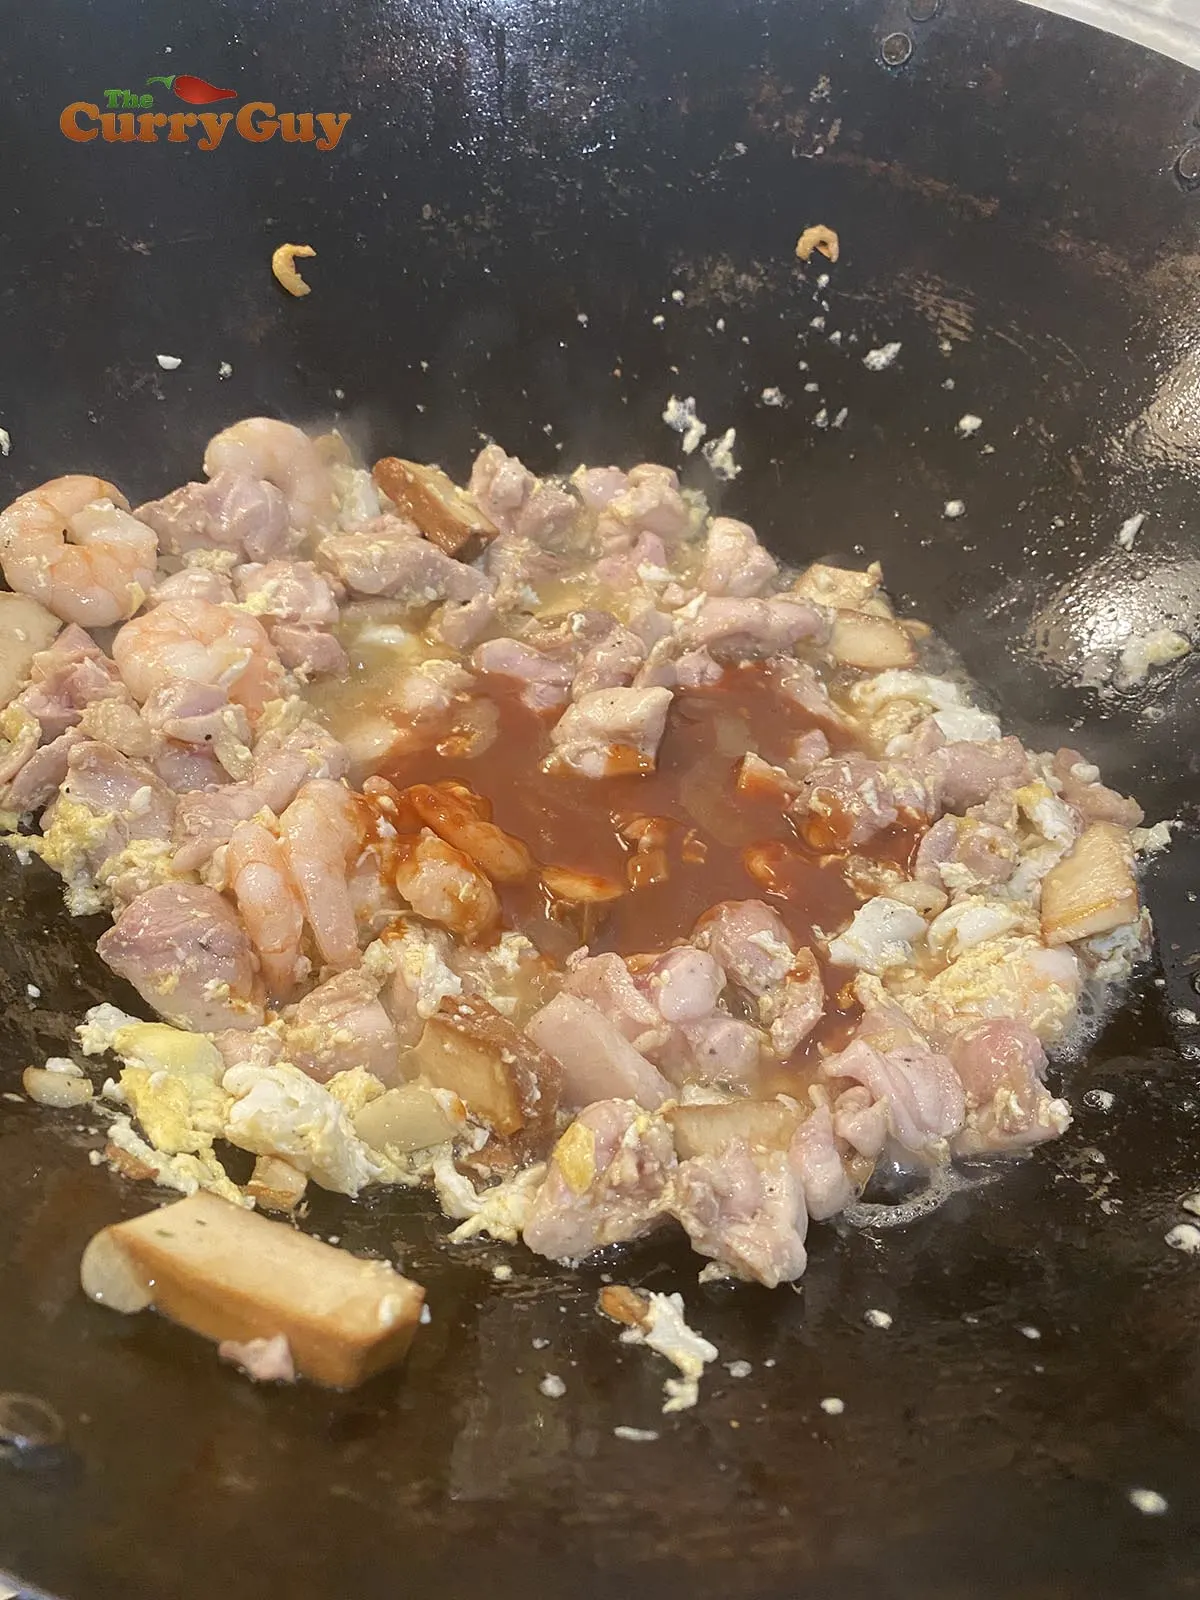 Adding sauce to wok